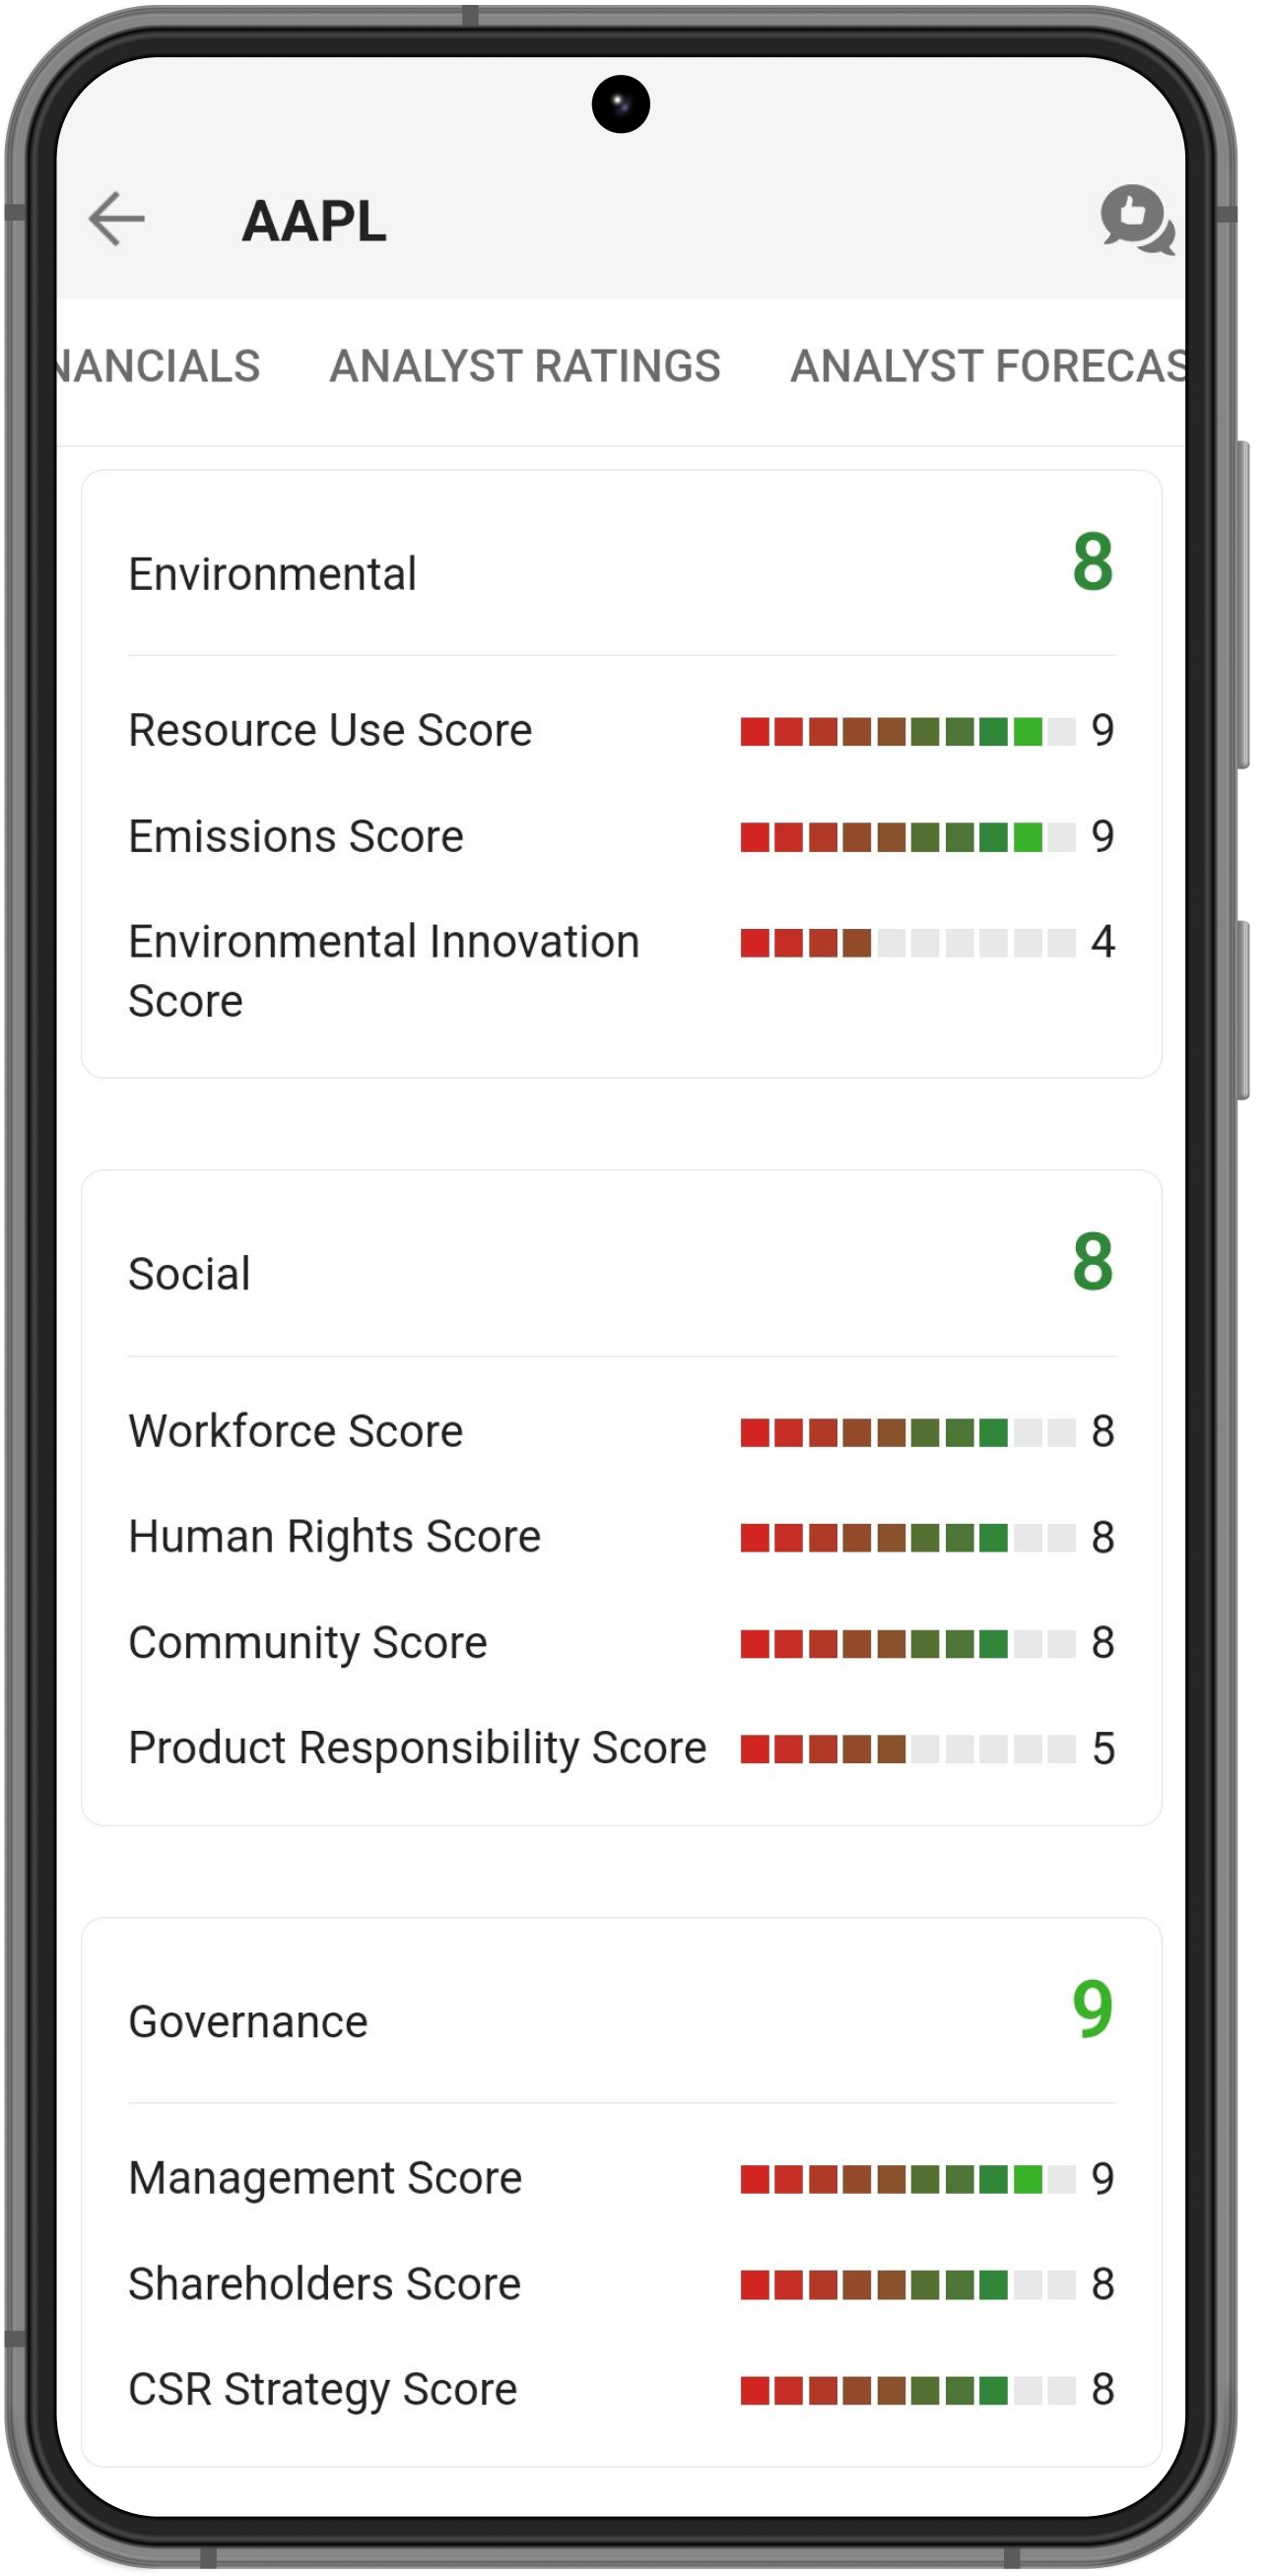 ESG scores on the mobile app